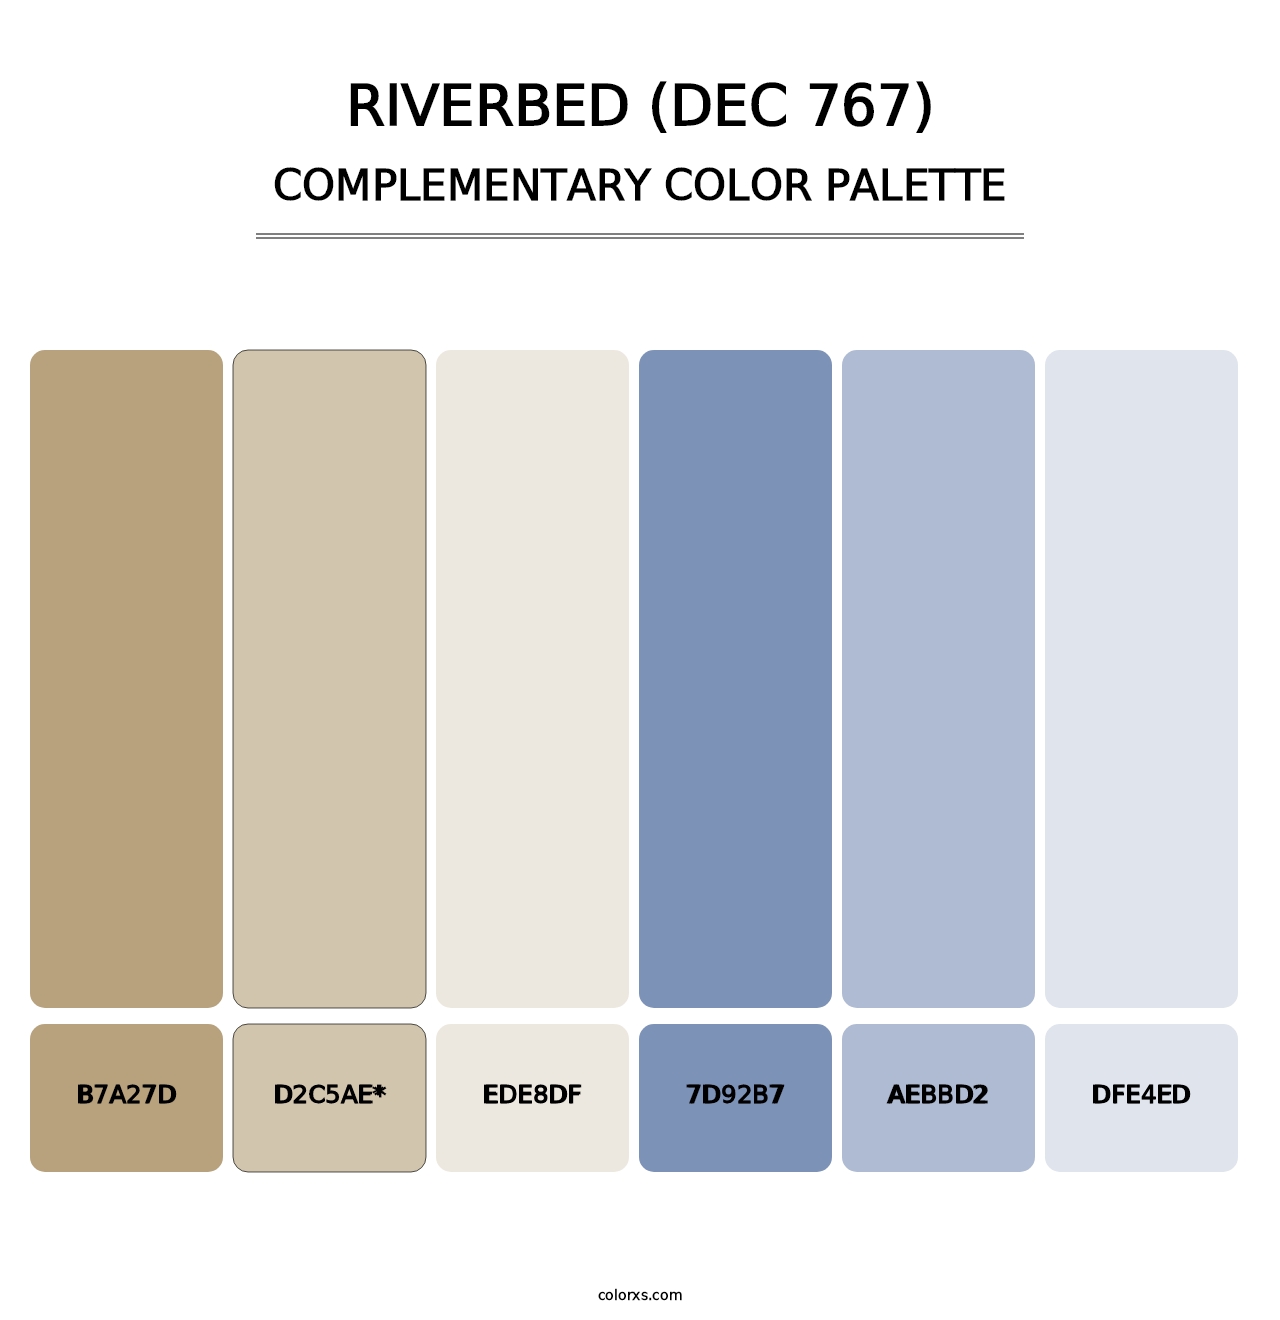 Riverbed (DEC 767) - Complementary Color Palette